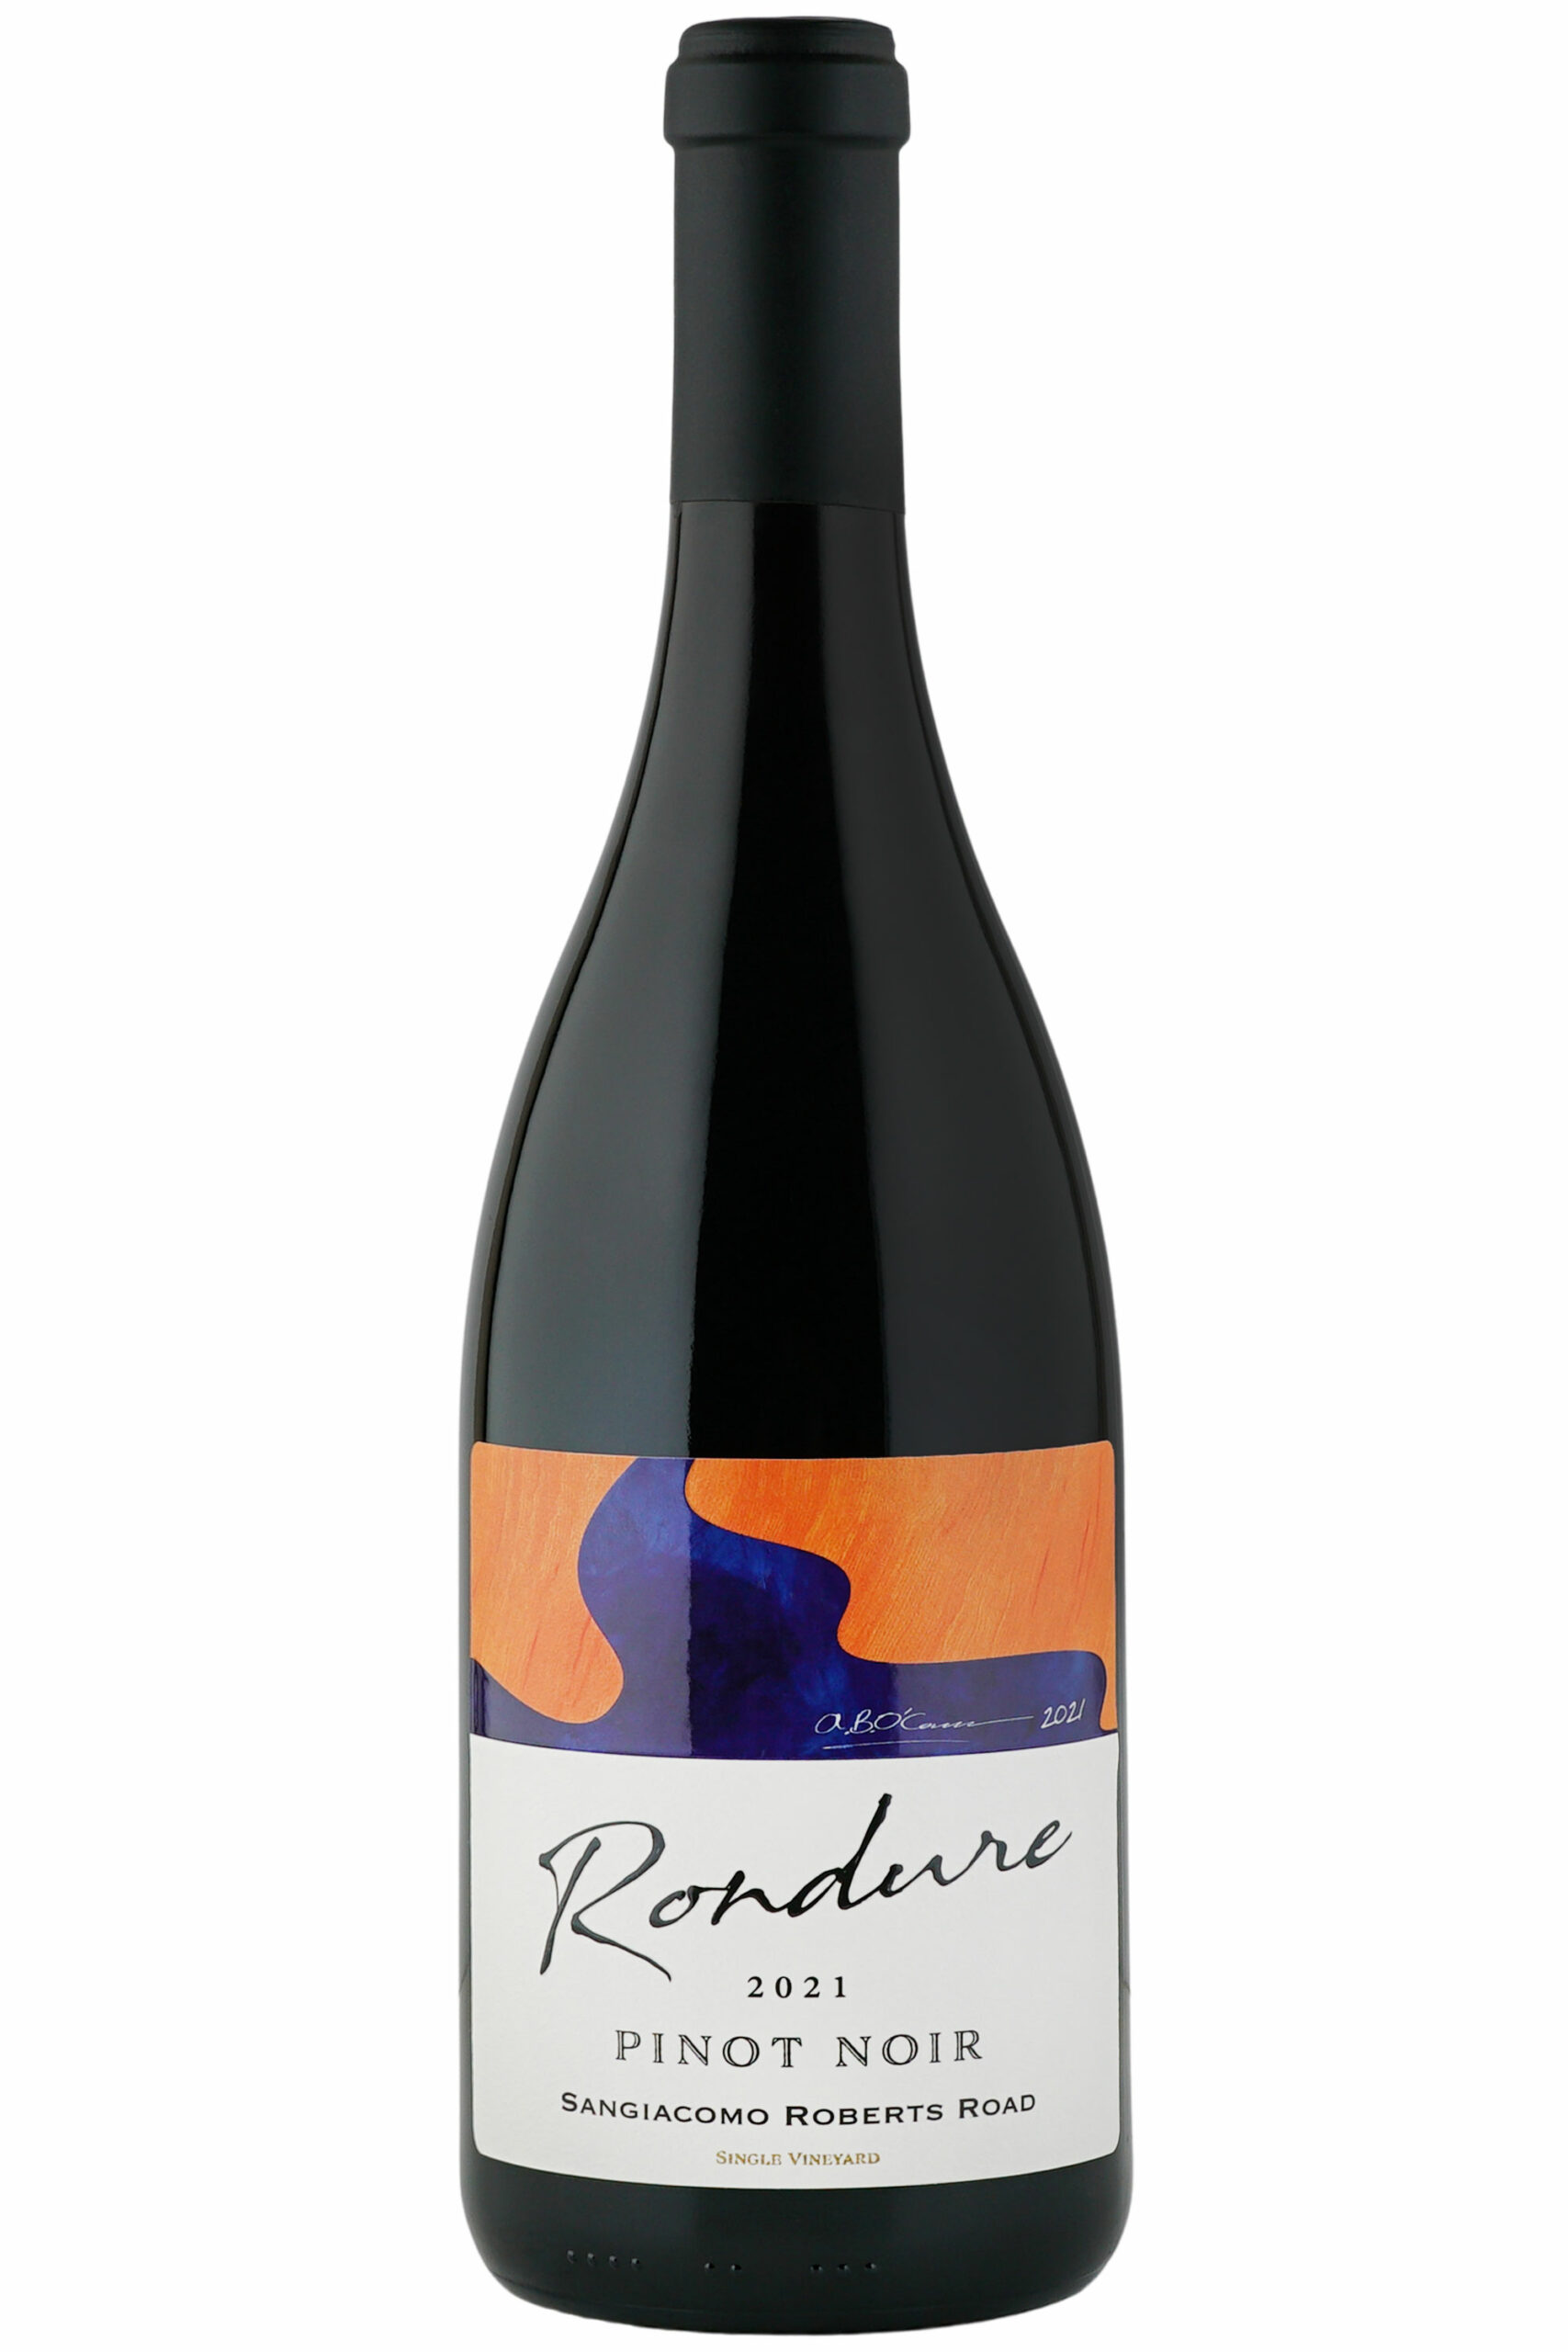 Bottle of 2021 Sangiacomo Roberts Road Pinot Noir